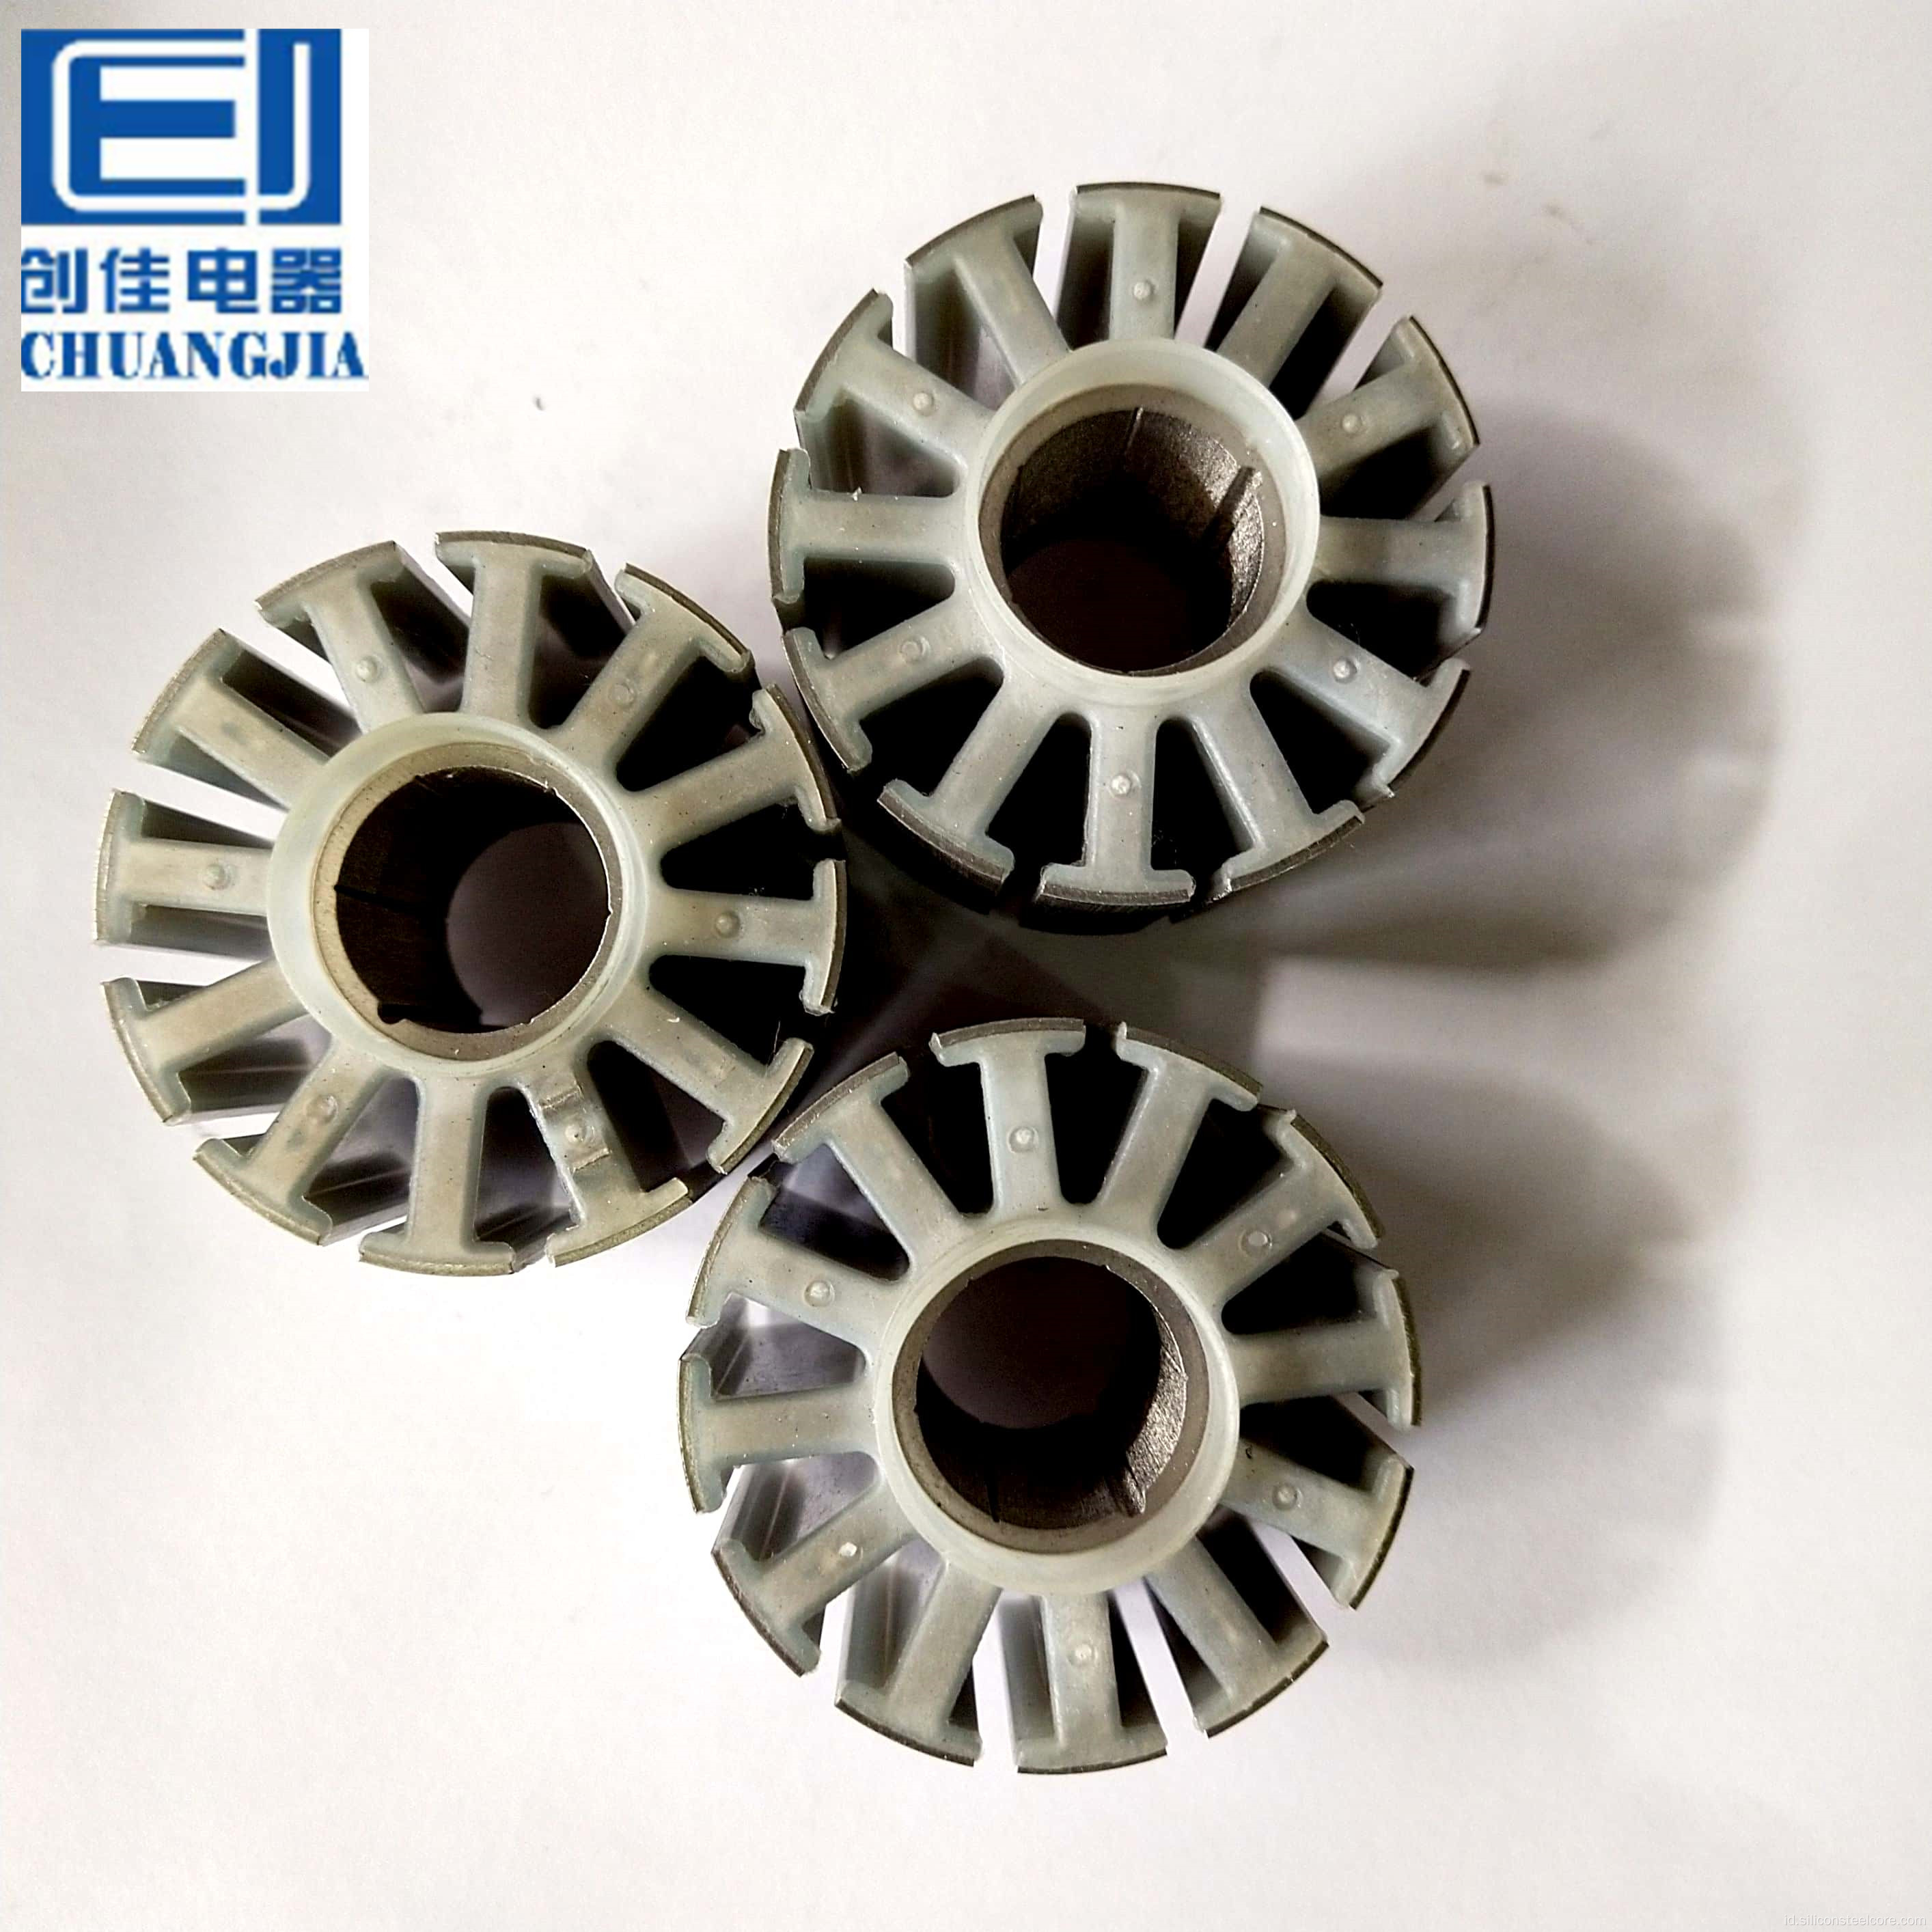 Chuangjia AC Motor Stator dan Rotor Silicon Steel Sheet 50W 800 0,5 mm